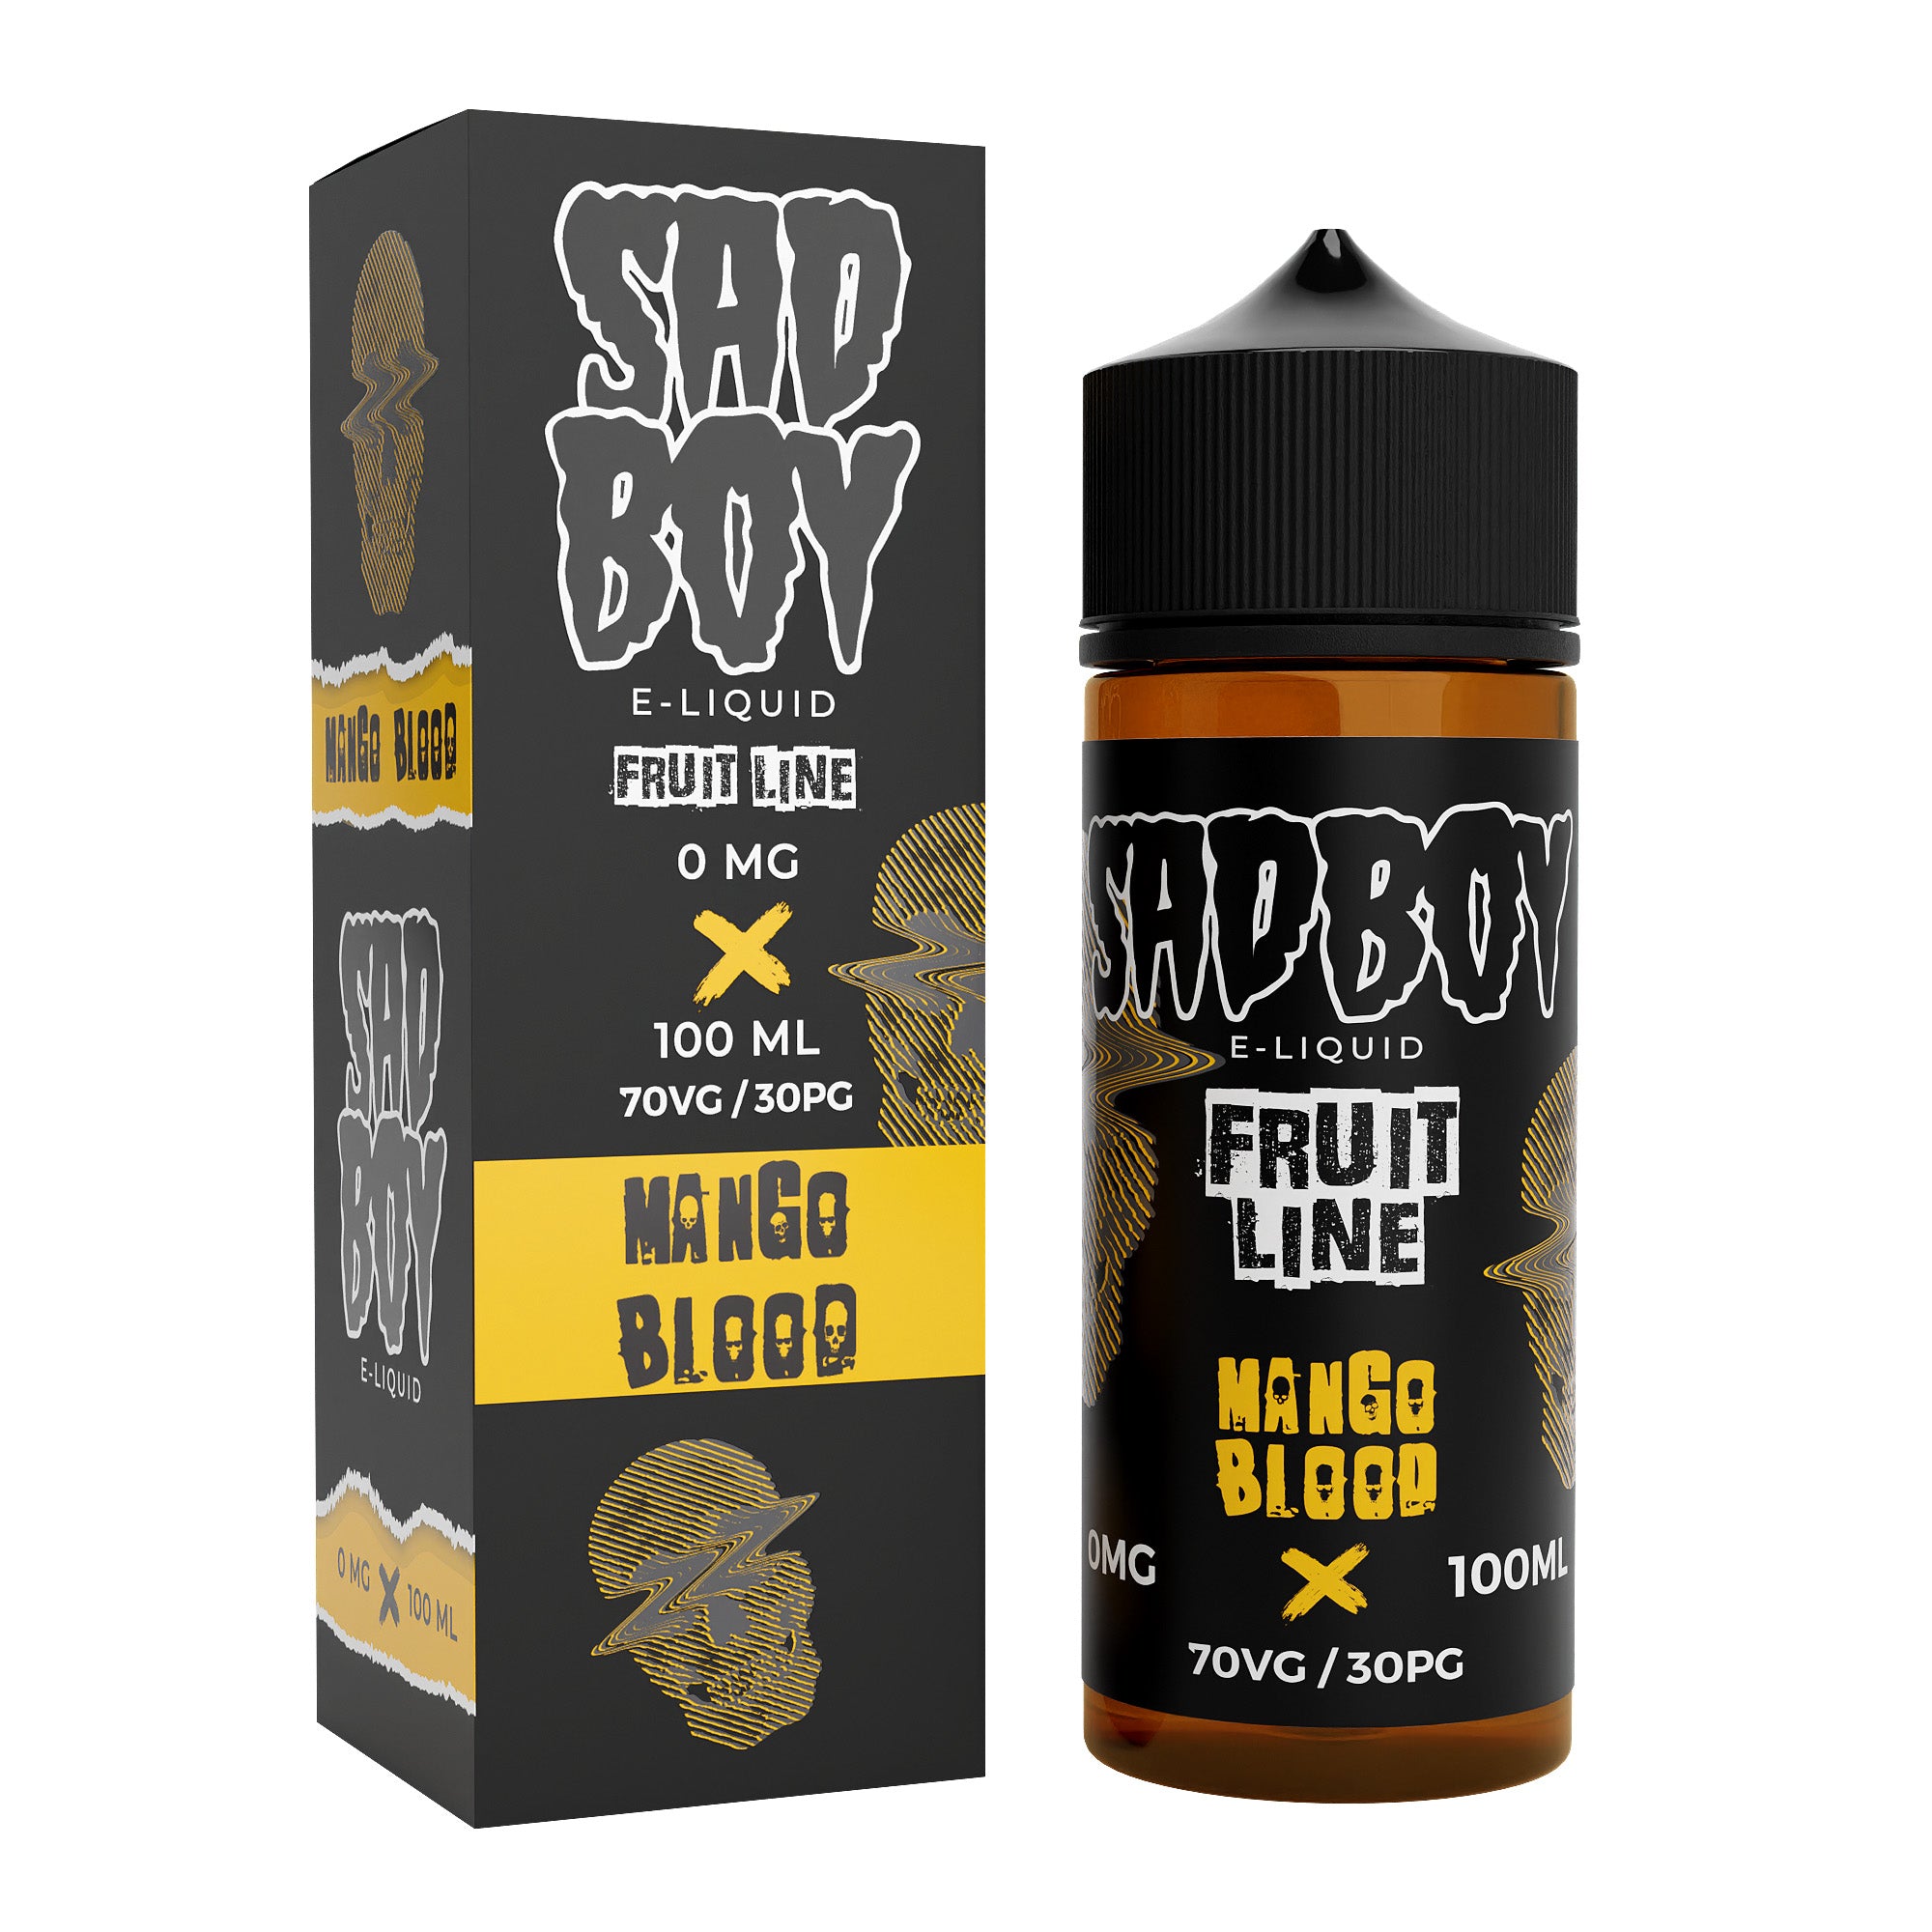 Sadboy Blood Line: Mango Blood 0mg 100ml Shortfill E-Liquid